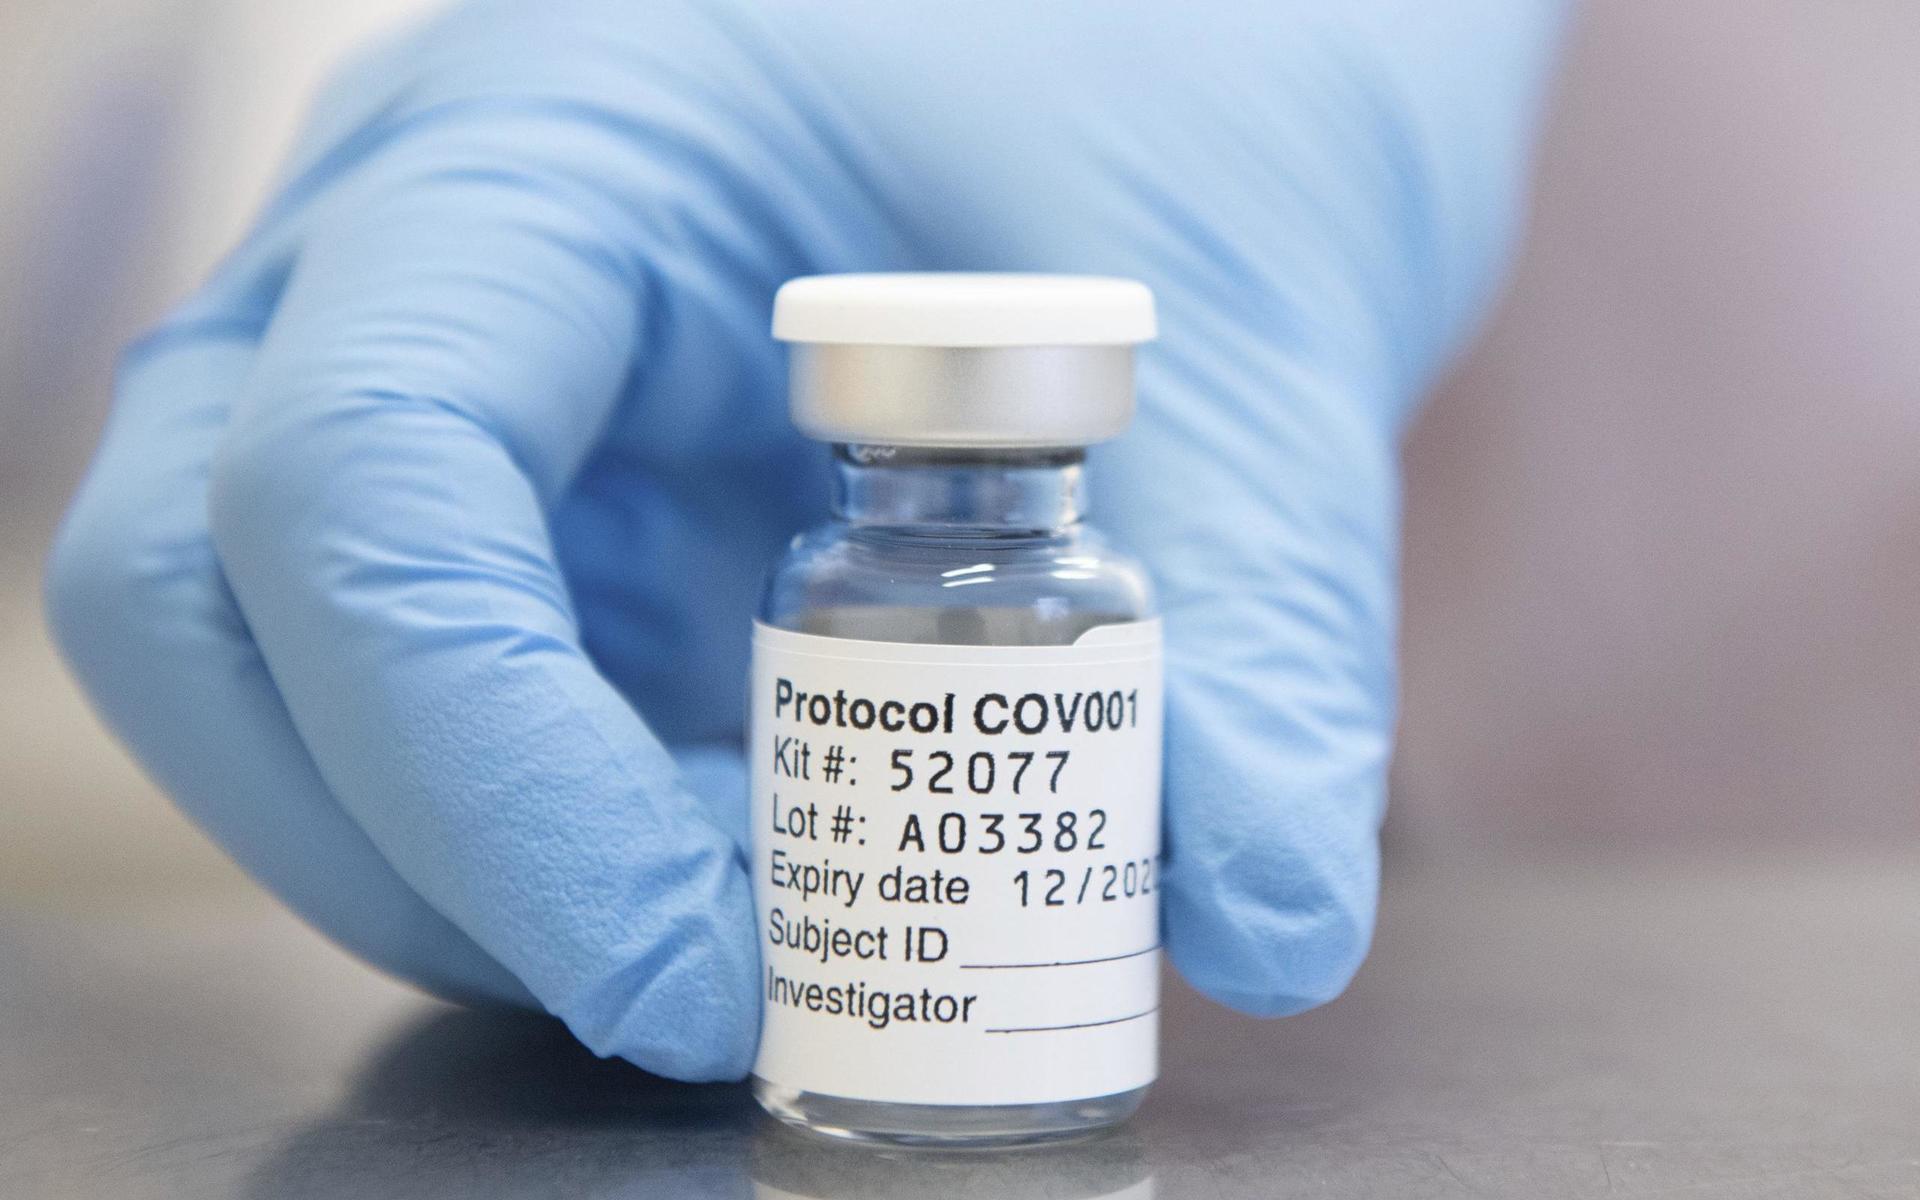 Astra Zenecas vaccinkandidat mot covid-19 har en effektivitet på 95 procent, uppger vd Pascal Soriot.